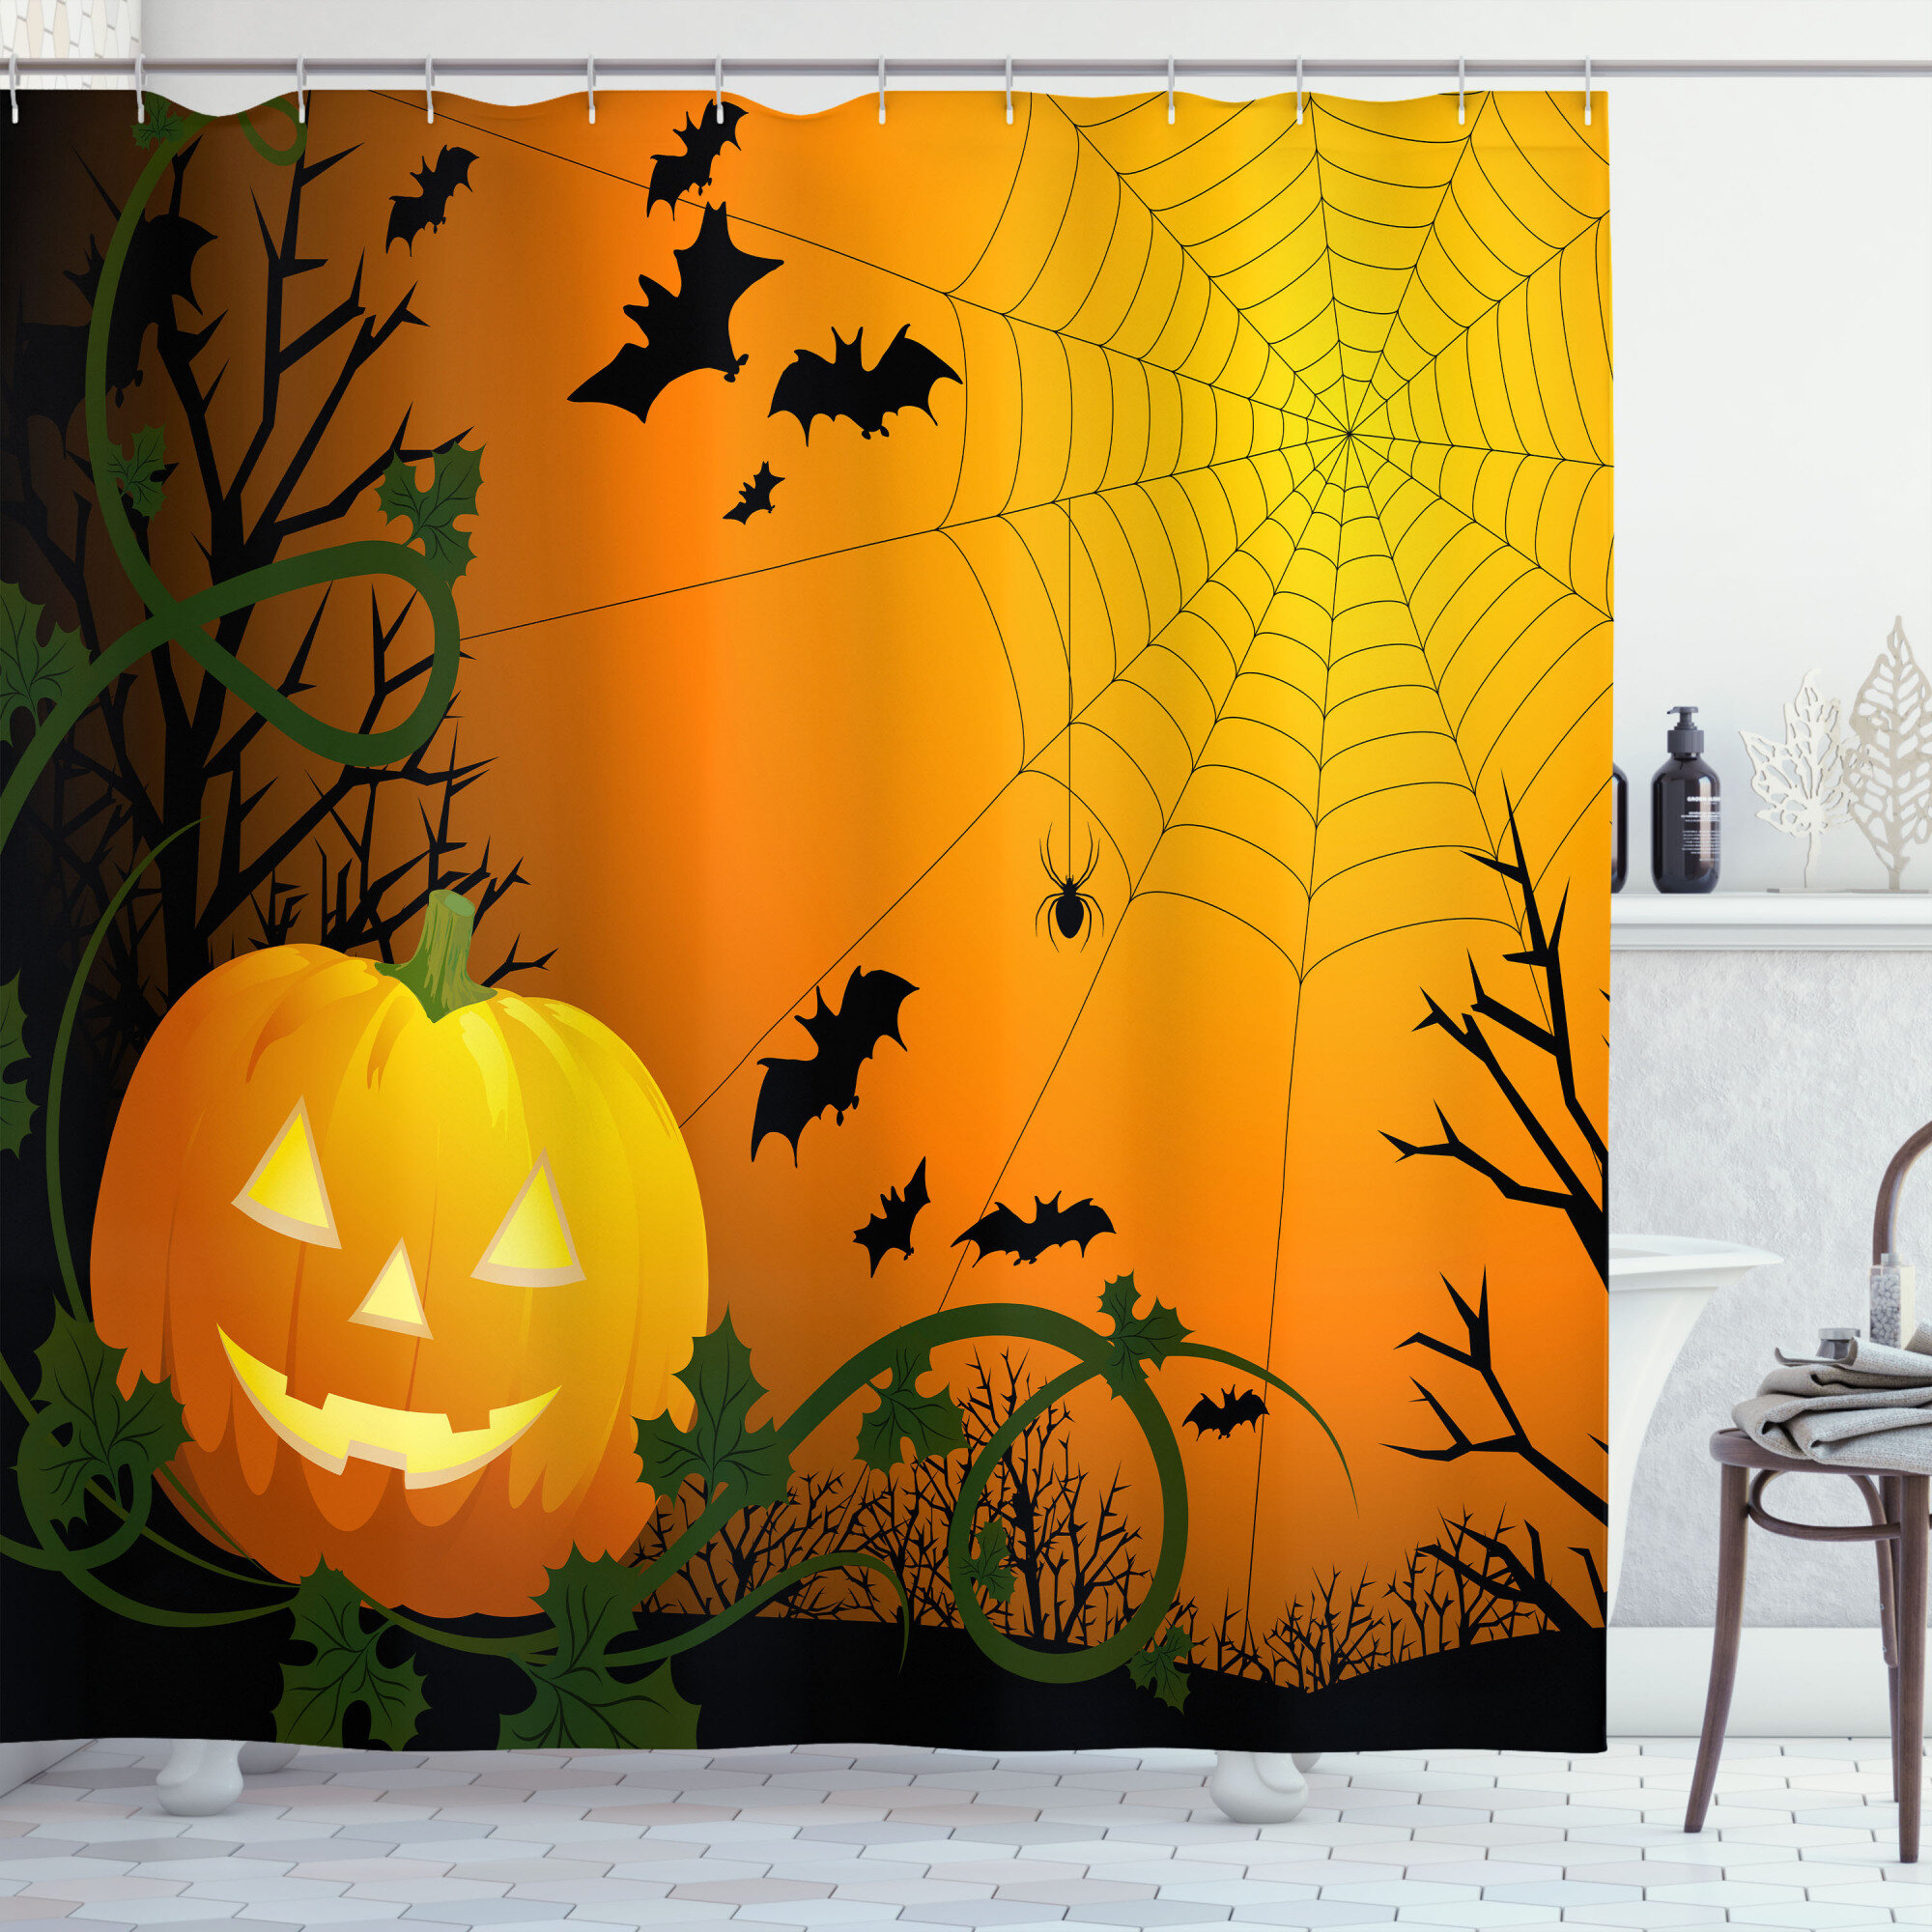 Dead Tree Pumpkin Bat Shower Curtain & Hooks Halloween Bathroom Accessory Sets 